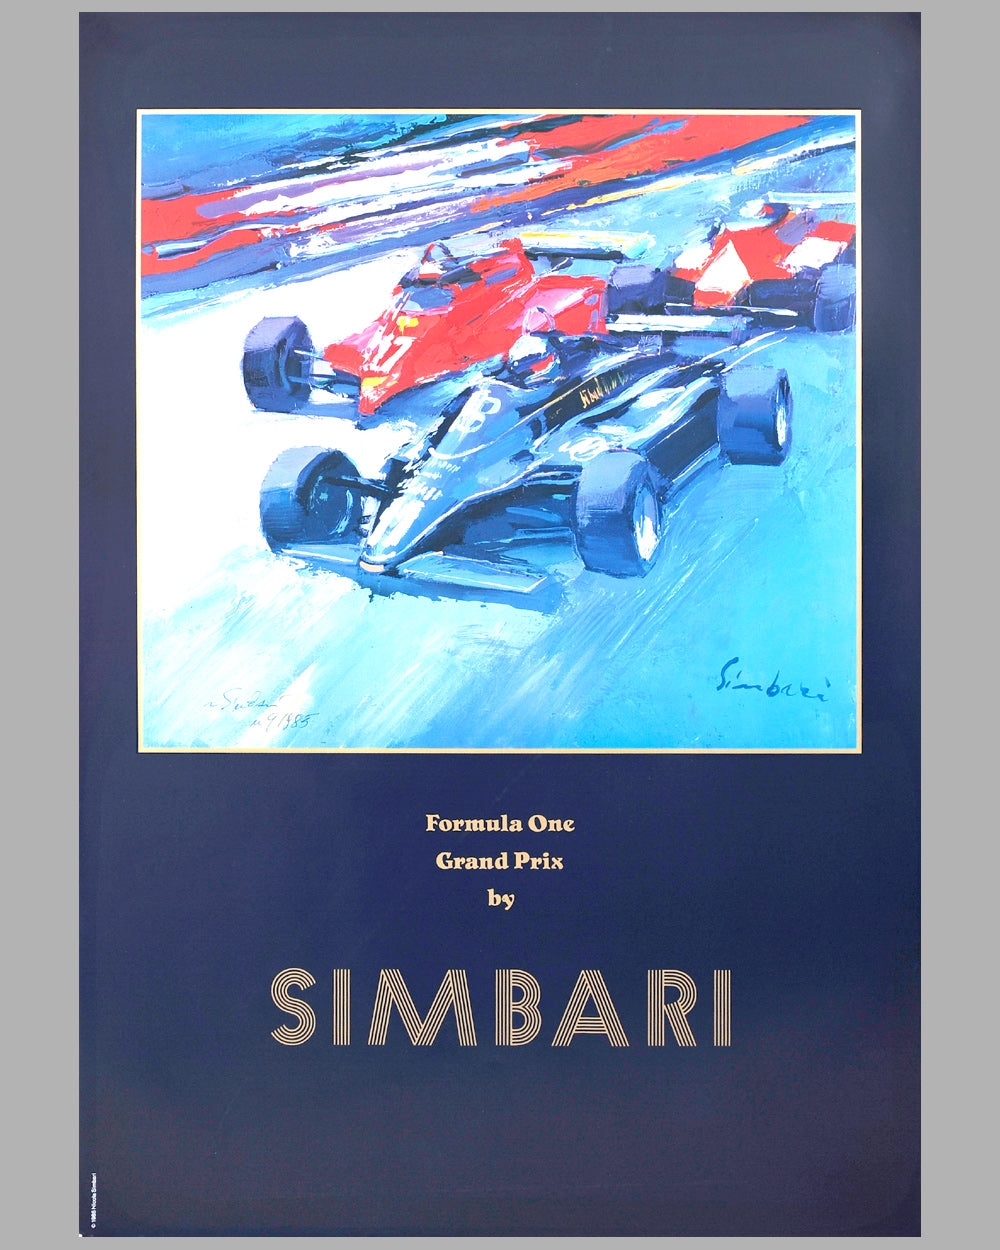 Nicola Simbari 1985 Formula One Grand Prix poster, Italy